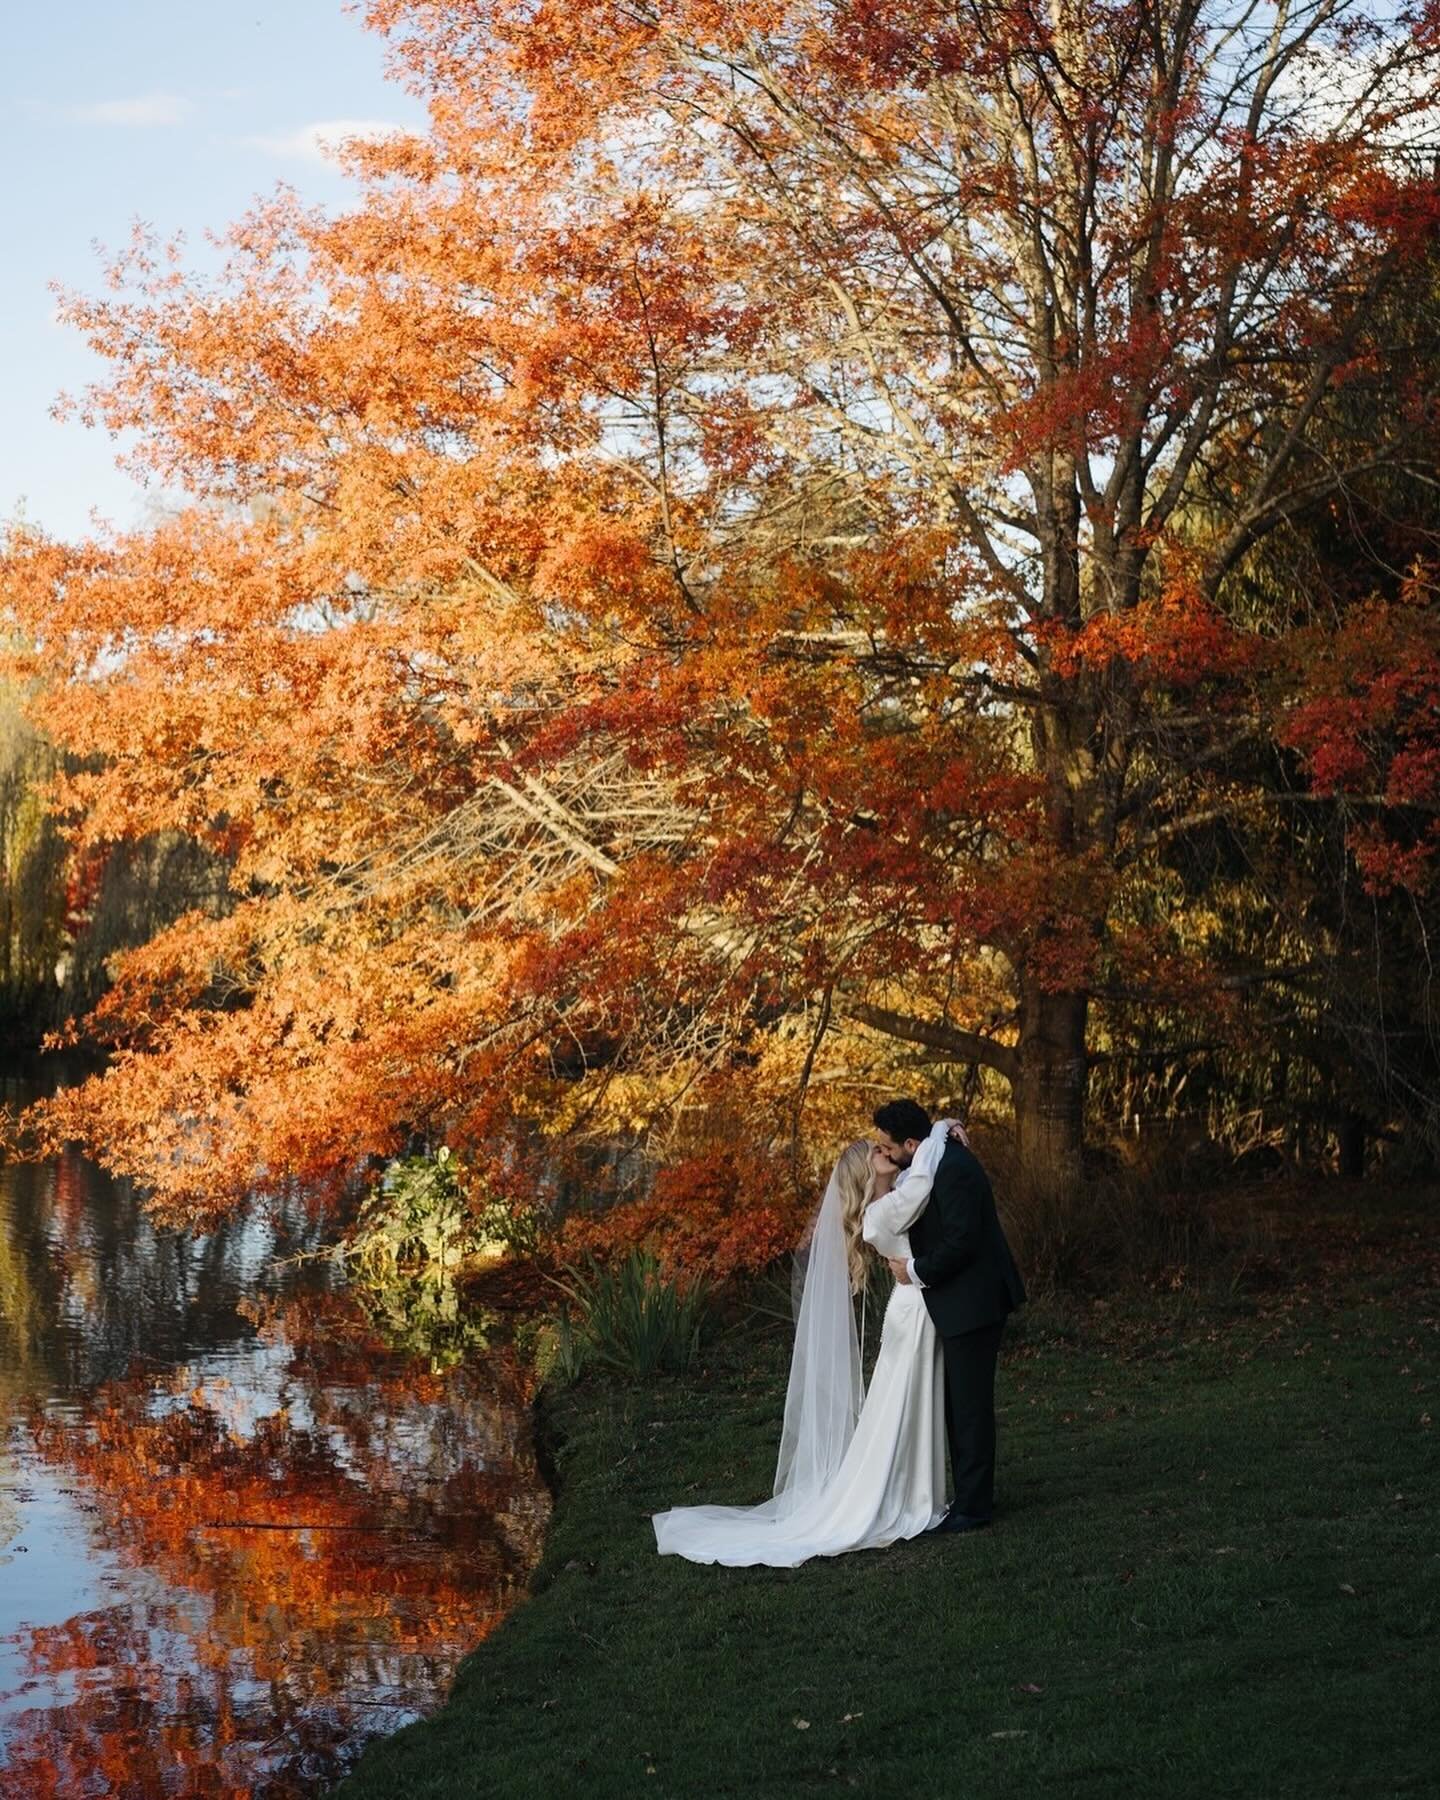 Autumn is such an underrated season for weddings 🧡❤️🤎 
⠀⠀⠀⠀⠀⠀⠀⠀⠀
Obsessed! 
⠀⠀⠀⠀⠀⠀⠀⠀⠀
⠀⠀⠀⠀⠀⠀⠀⠀⠀
⠀⠀⠀⠀⠀⠀⠀⠀⠀
⠀⠀⠀⠀⠀⠀⠀⠀⠀
⠀⠀⠀⠀⠀⠀⠀⠀⠀
#weddingphotography #weddinginspiration #sydneywedding #weddinggoals #married #engaged #sydneyweddingphotographer